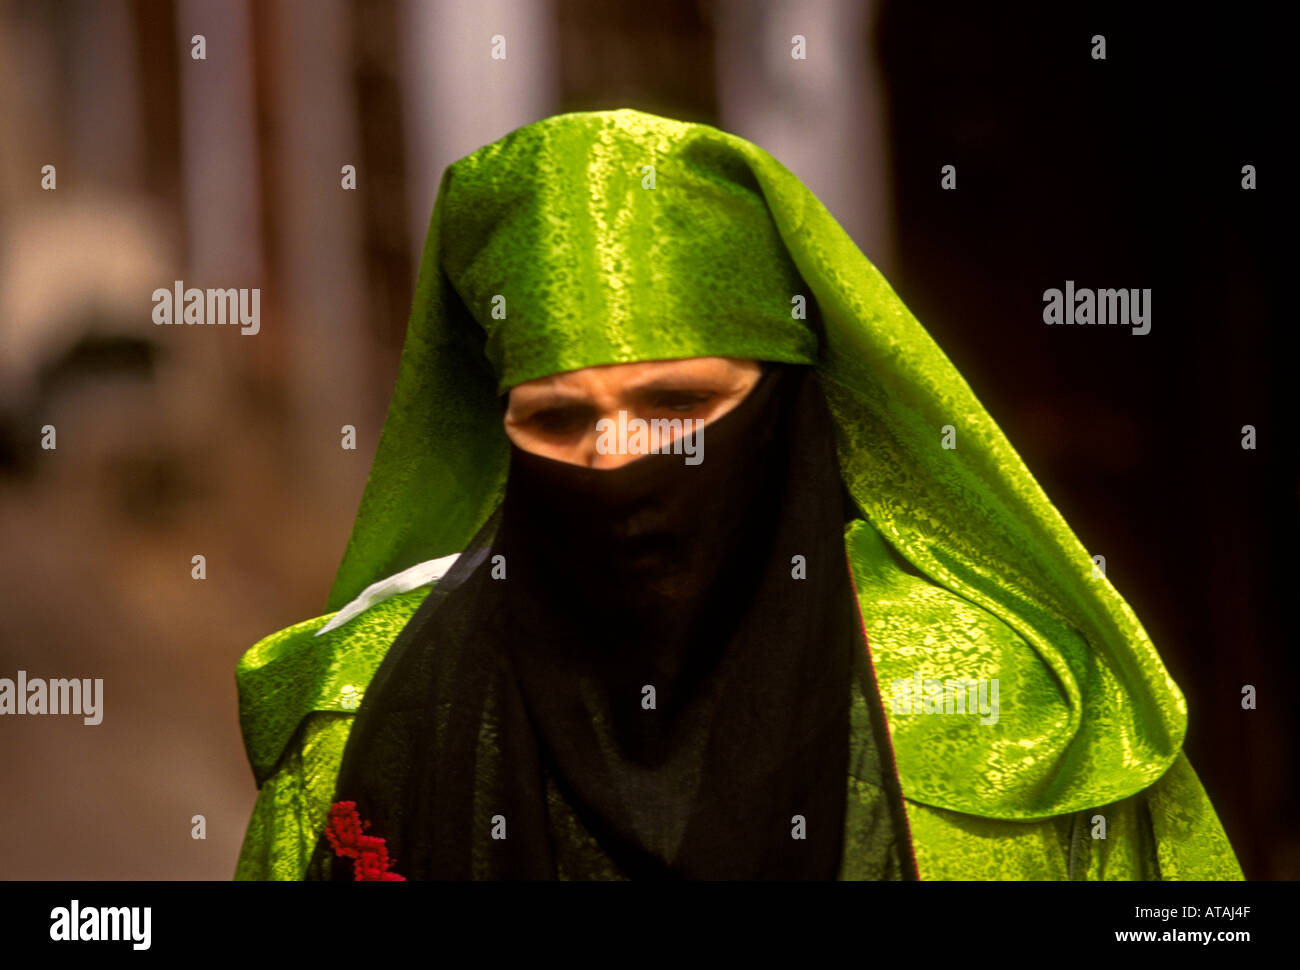 1, 1, marokkanische Frau, Marokkanisch, Frau, erwachsene Frau, tragen Schleier verhüllt, Kopfbedeckung, Fès el-Bali, Stadt Fes, Fes, Marokko, Afrika Stockfoto